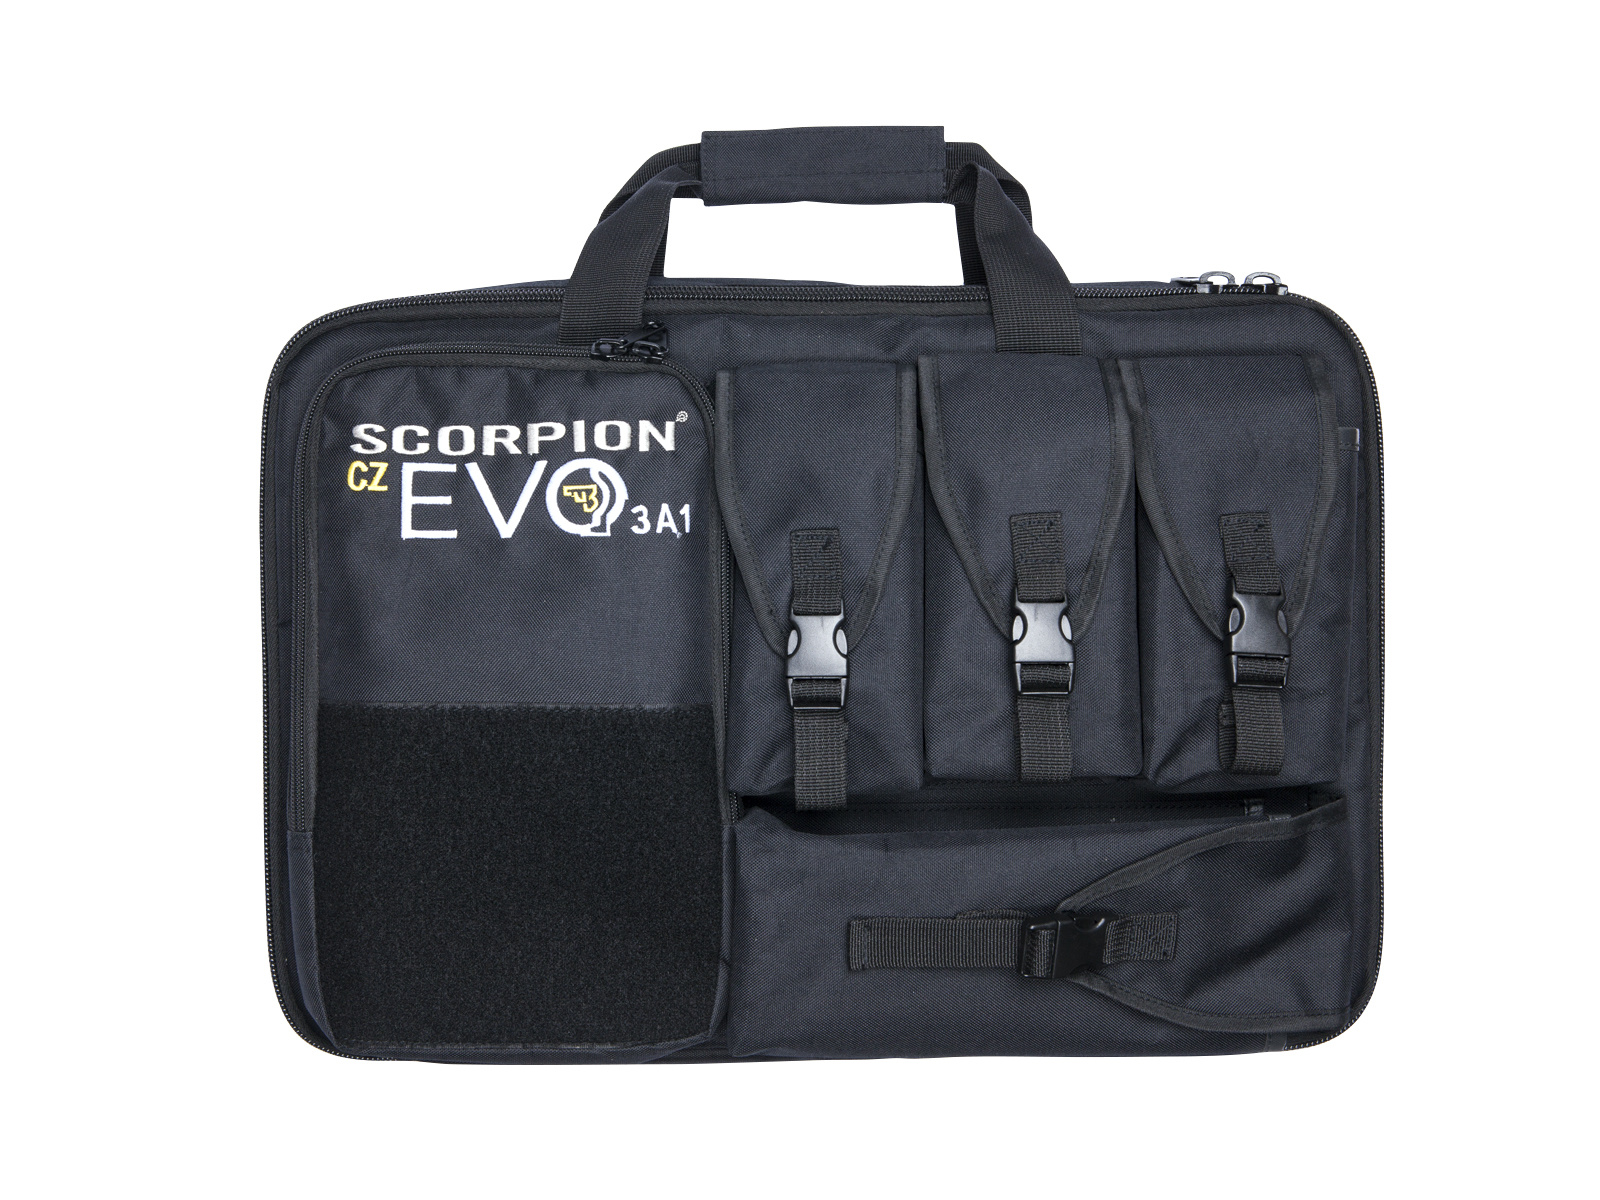 ASG Pokrowiec na karabin Scorpion Bag EVO 3 A1 - BK